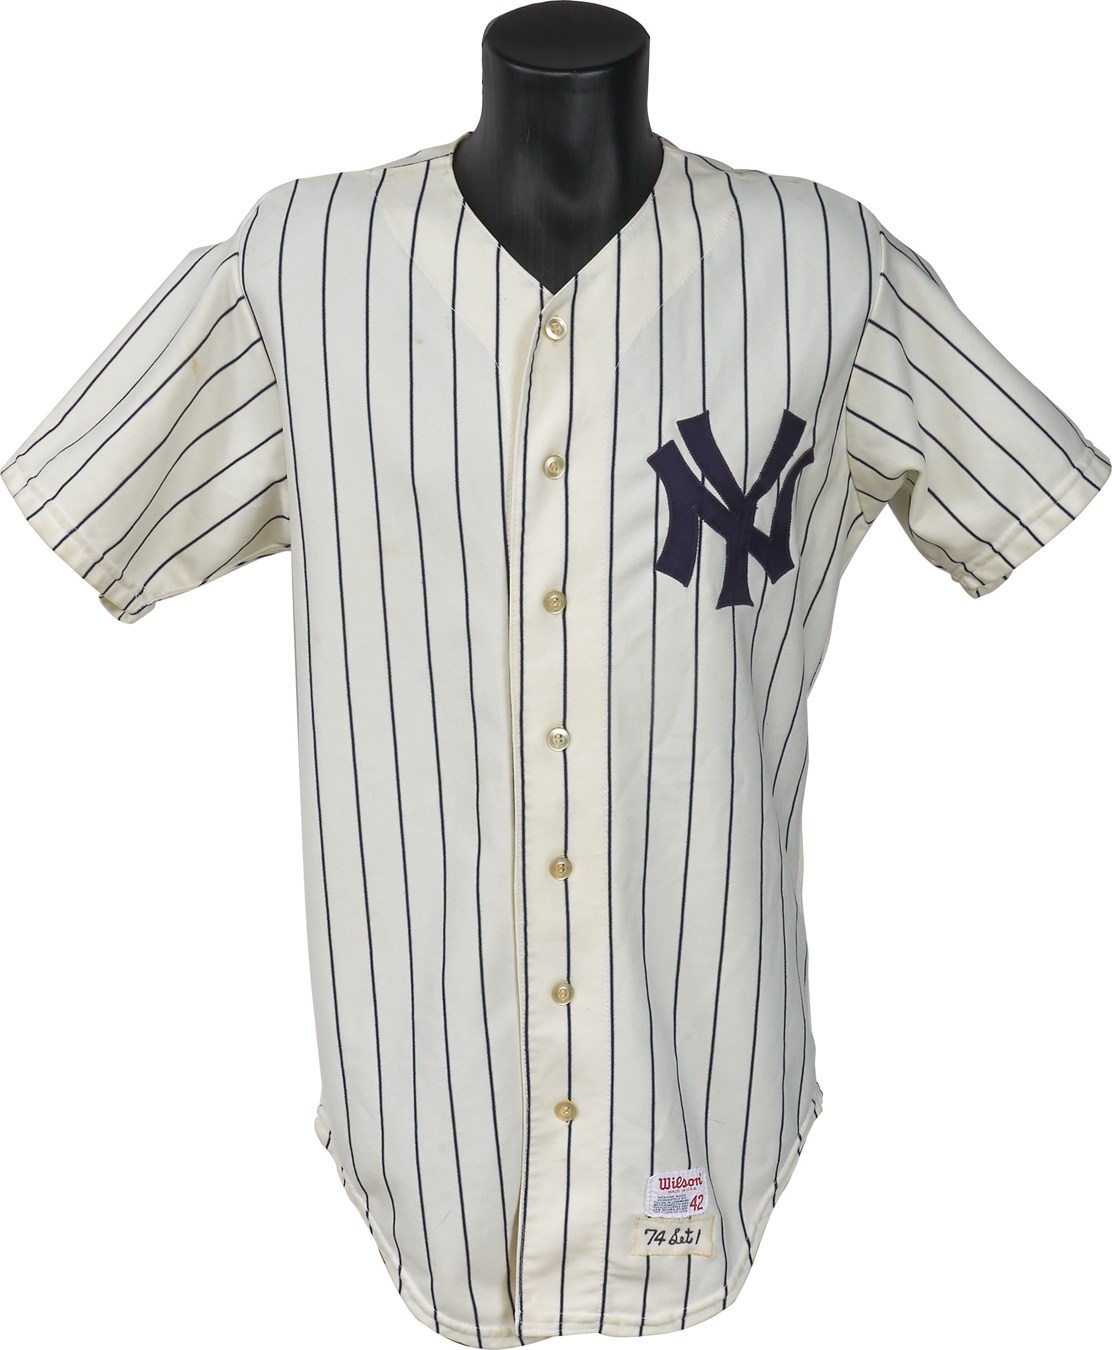 - 1974 Graig Nettles New York Yankees Game Worn Jersey